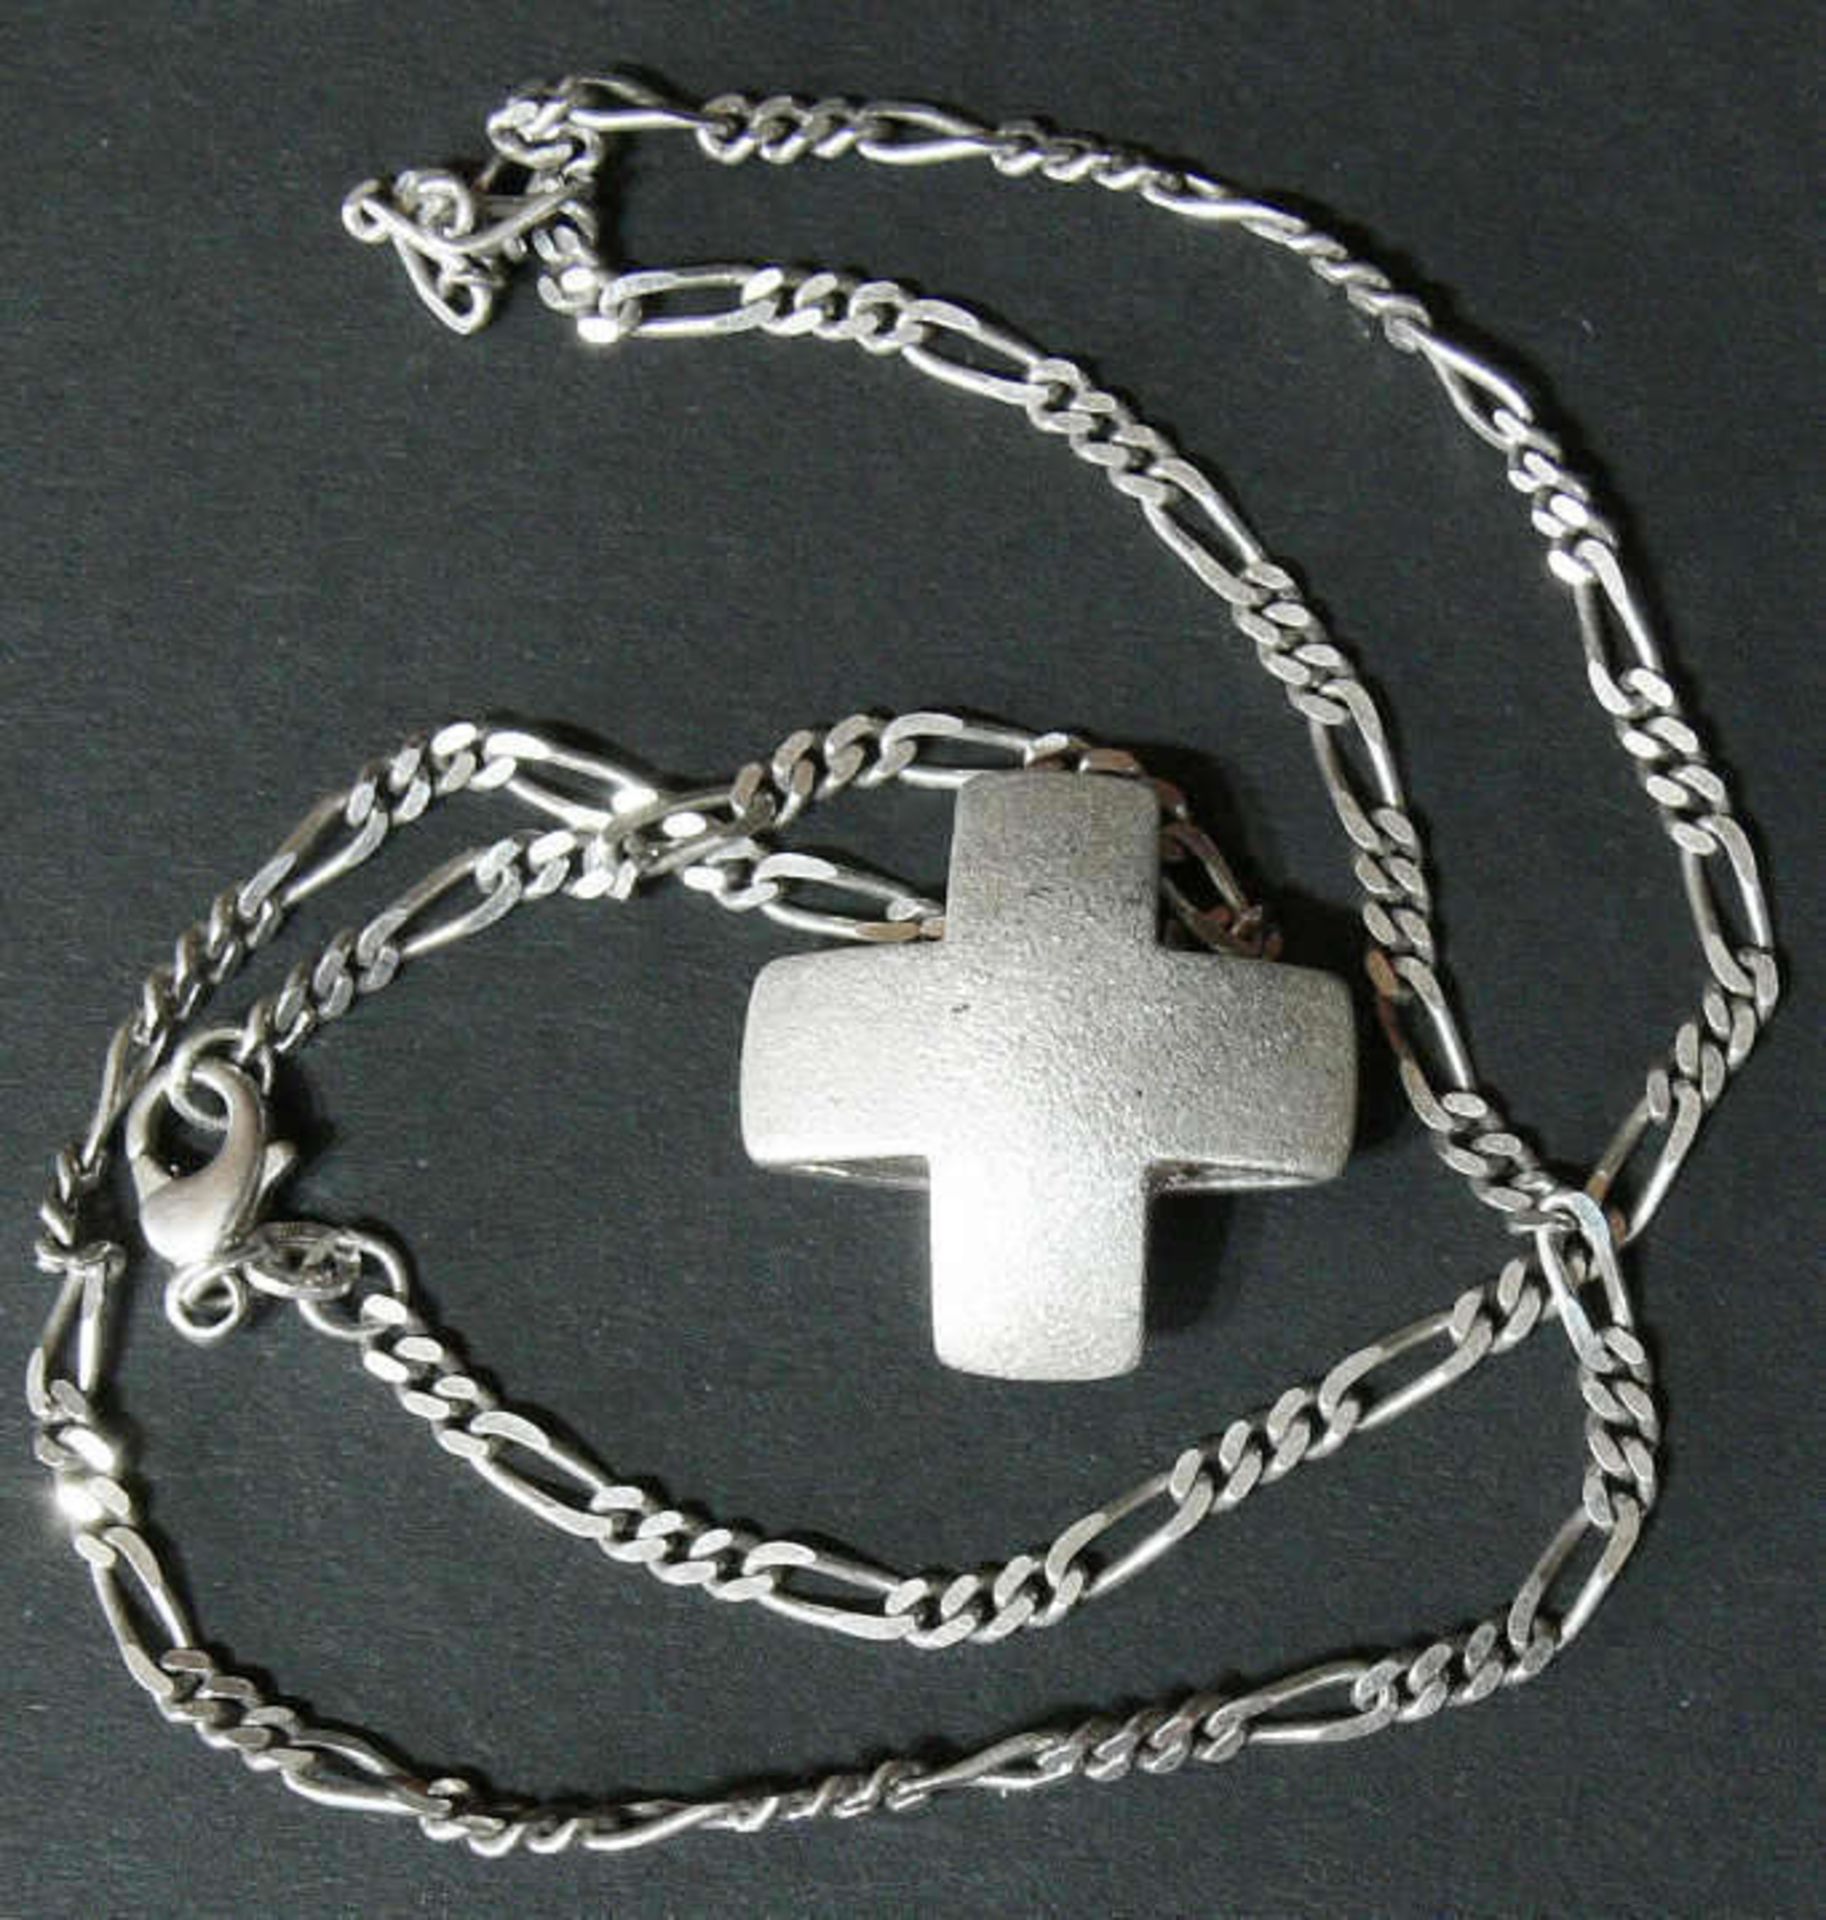 Silberkette mit Kreuz - Anhänger. Silber 925. Länge: ca. 44 cm. Maße Kreuz: ca. 23 mm x ca. 23 mm.